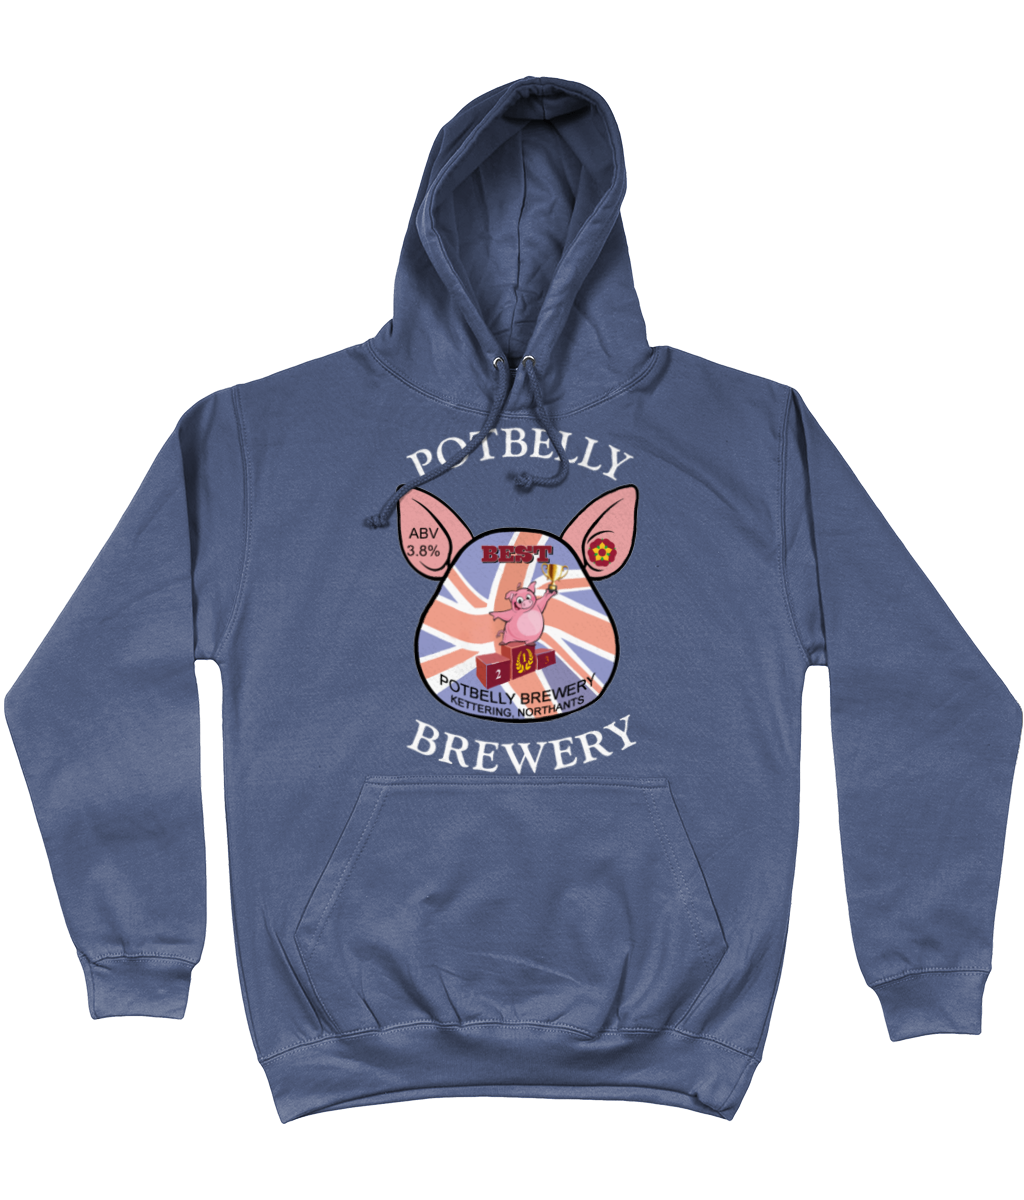 Potbelly Brewery BEST Hoodie